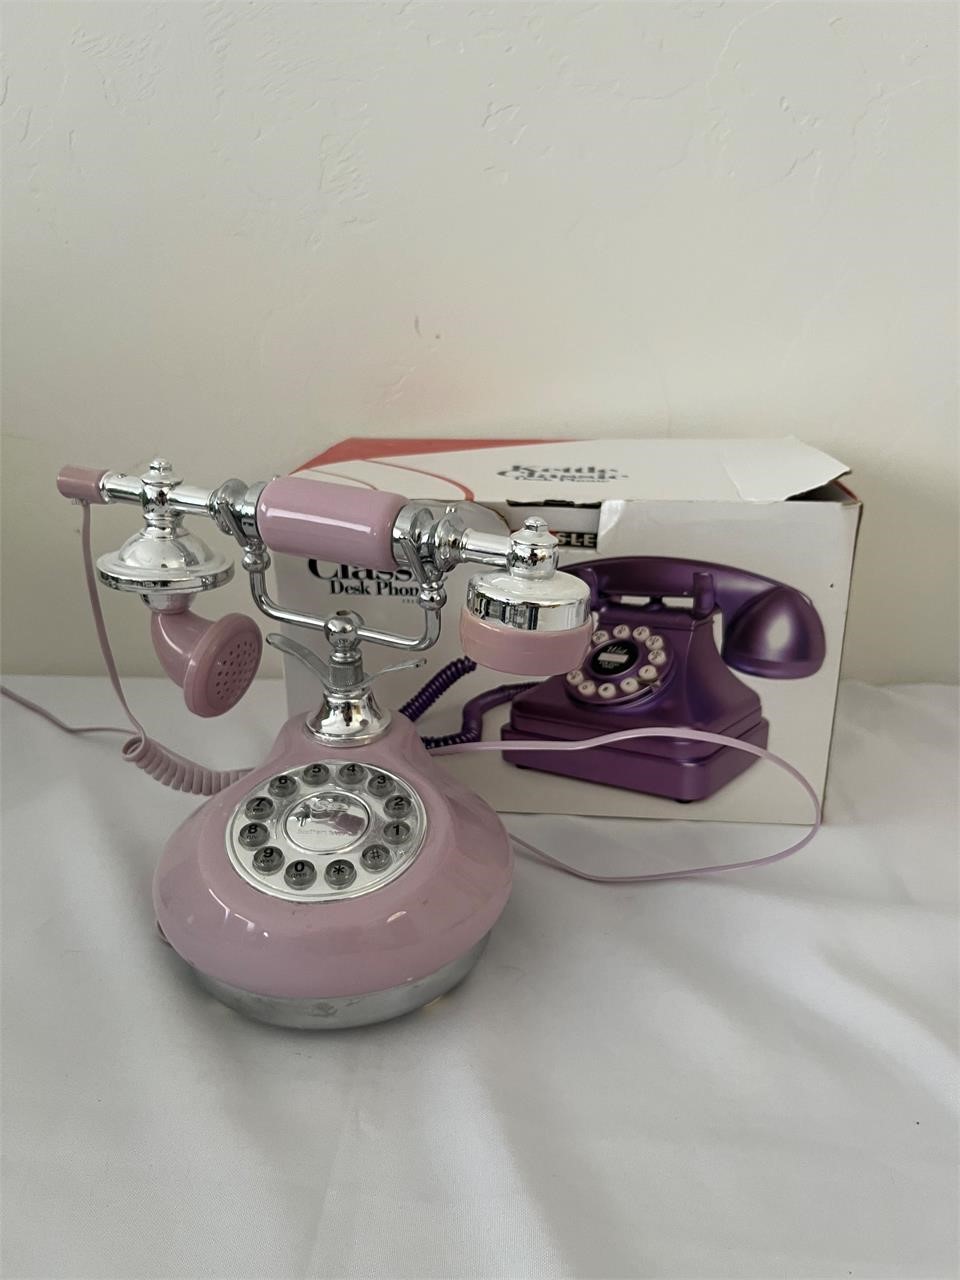 Southern Telecom + Crosley Classic Desk Phone